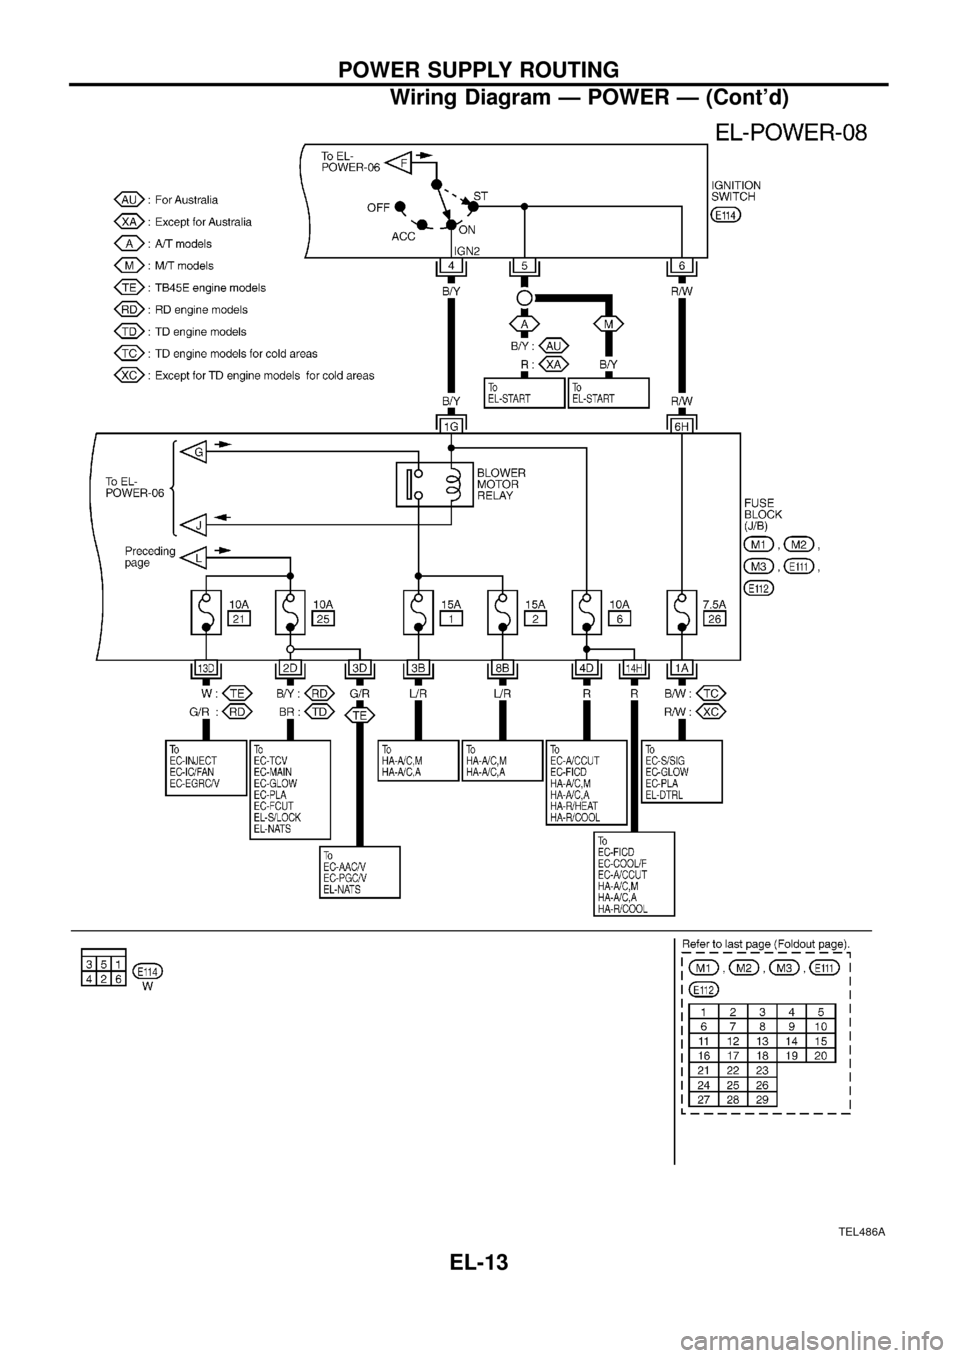 NISSAN PATROL 1998 Y61 / 5.G Electrical System User Guide TEL486A
POWER SUPPLY ROUTING
Wiring Diagram Ð POWER Ð (Contd)
EL-13 